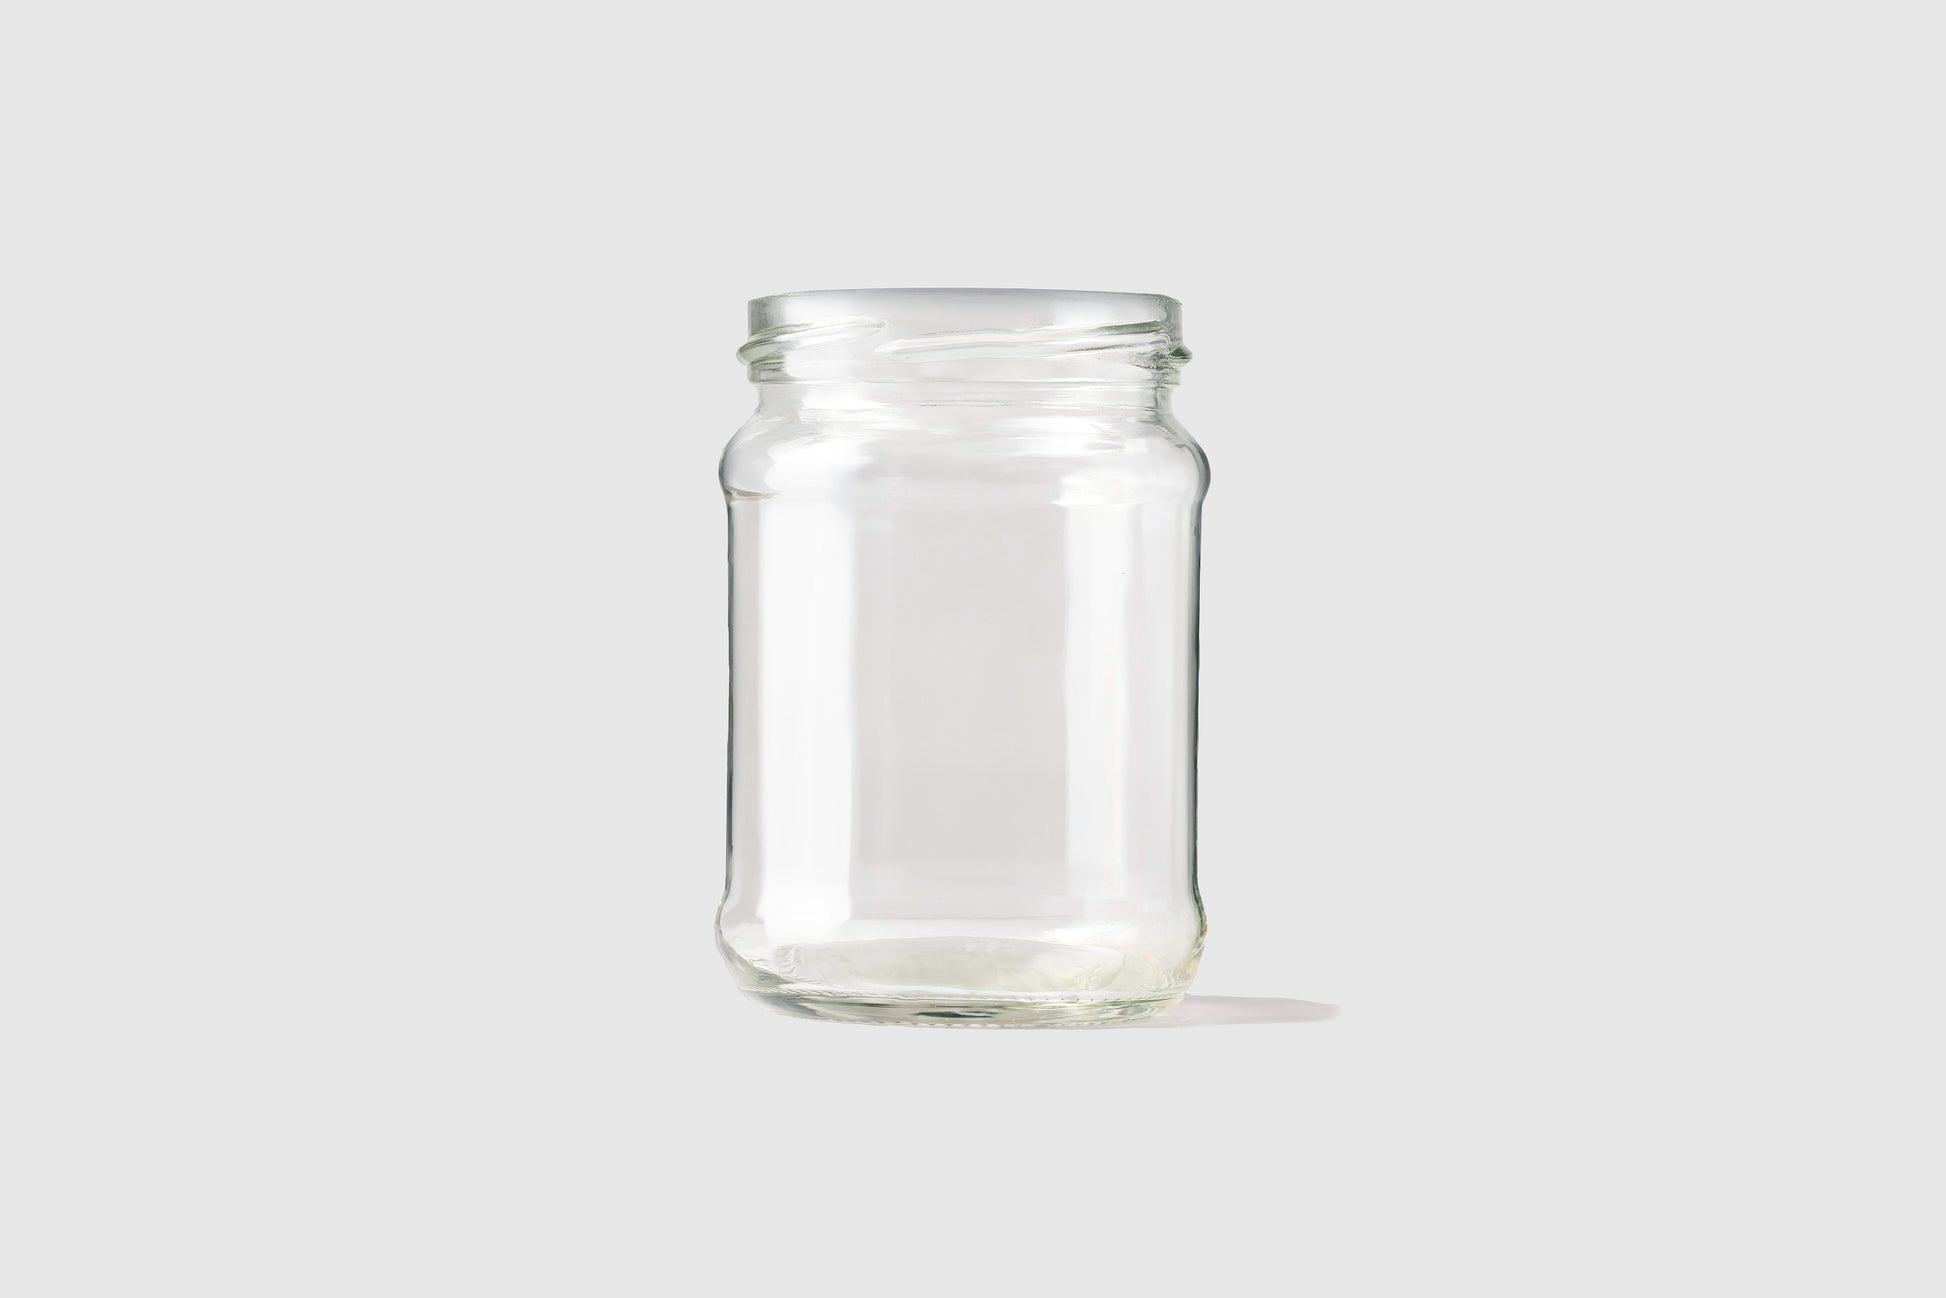 250ml glass jars with lids